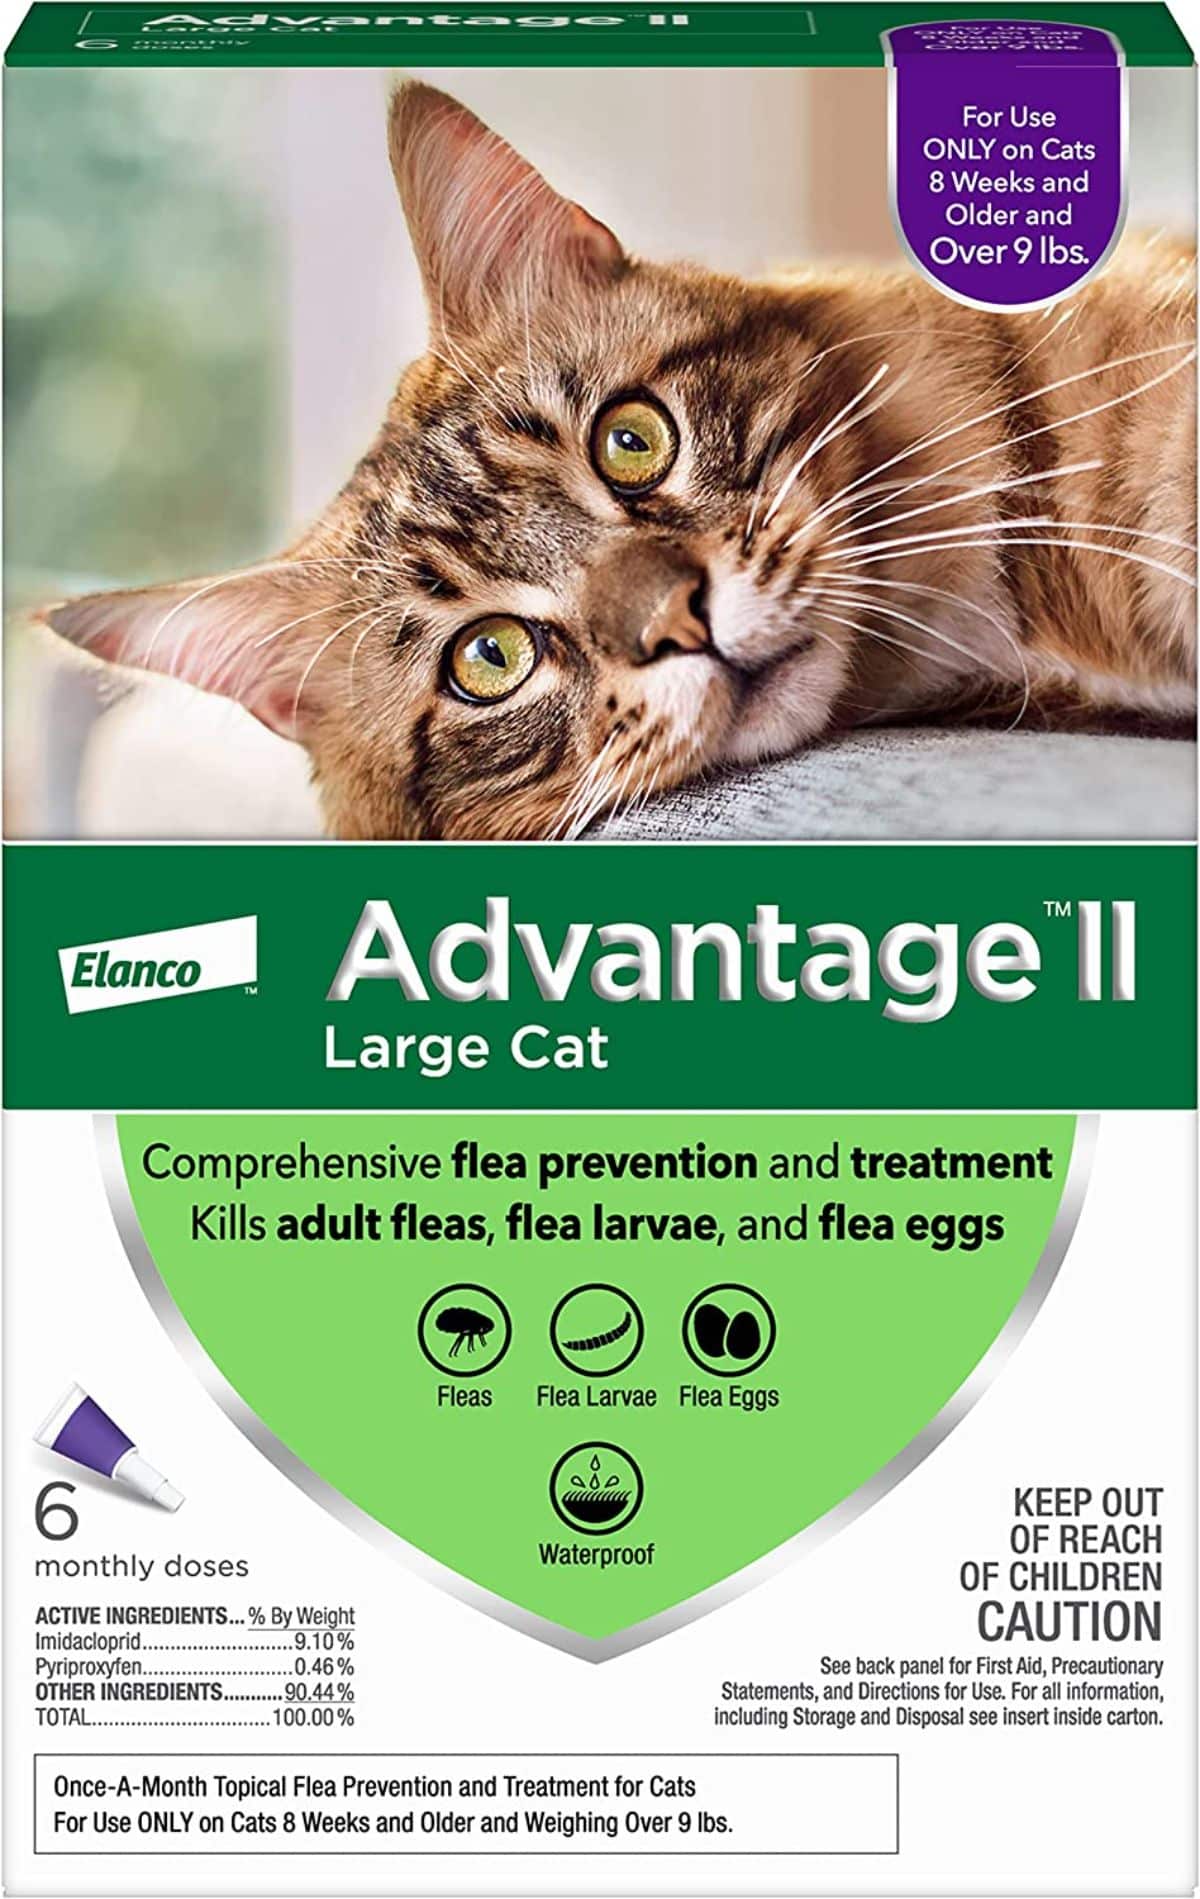 Advantage II fleat cat treatment.